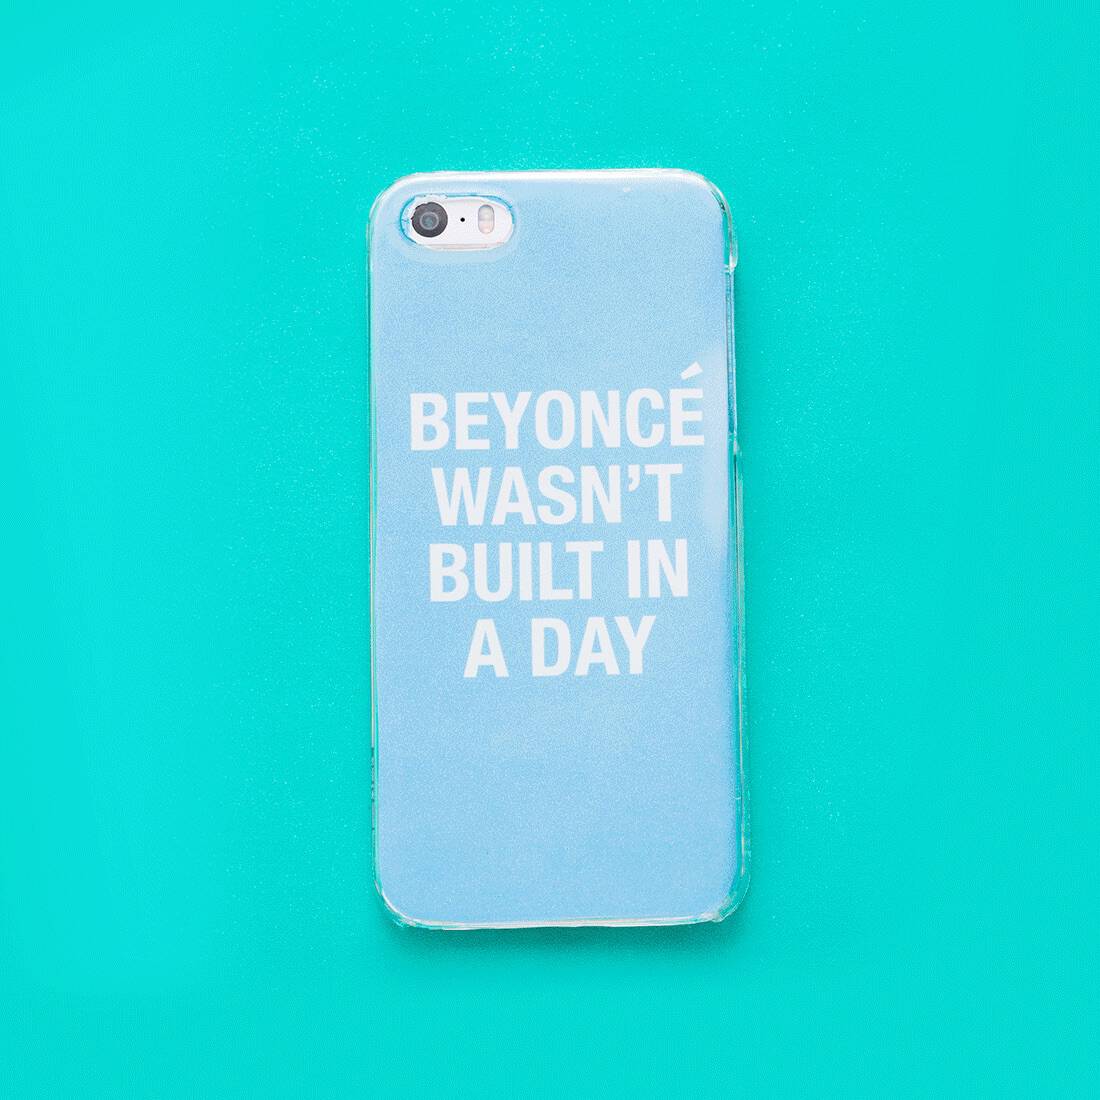 Beyonce phone case